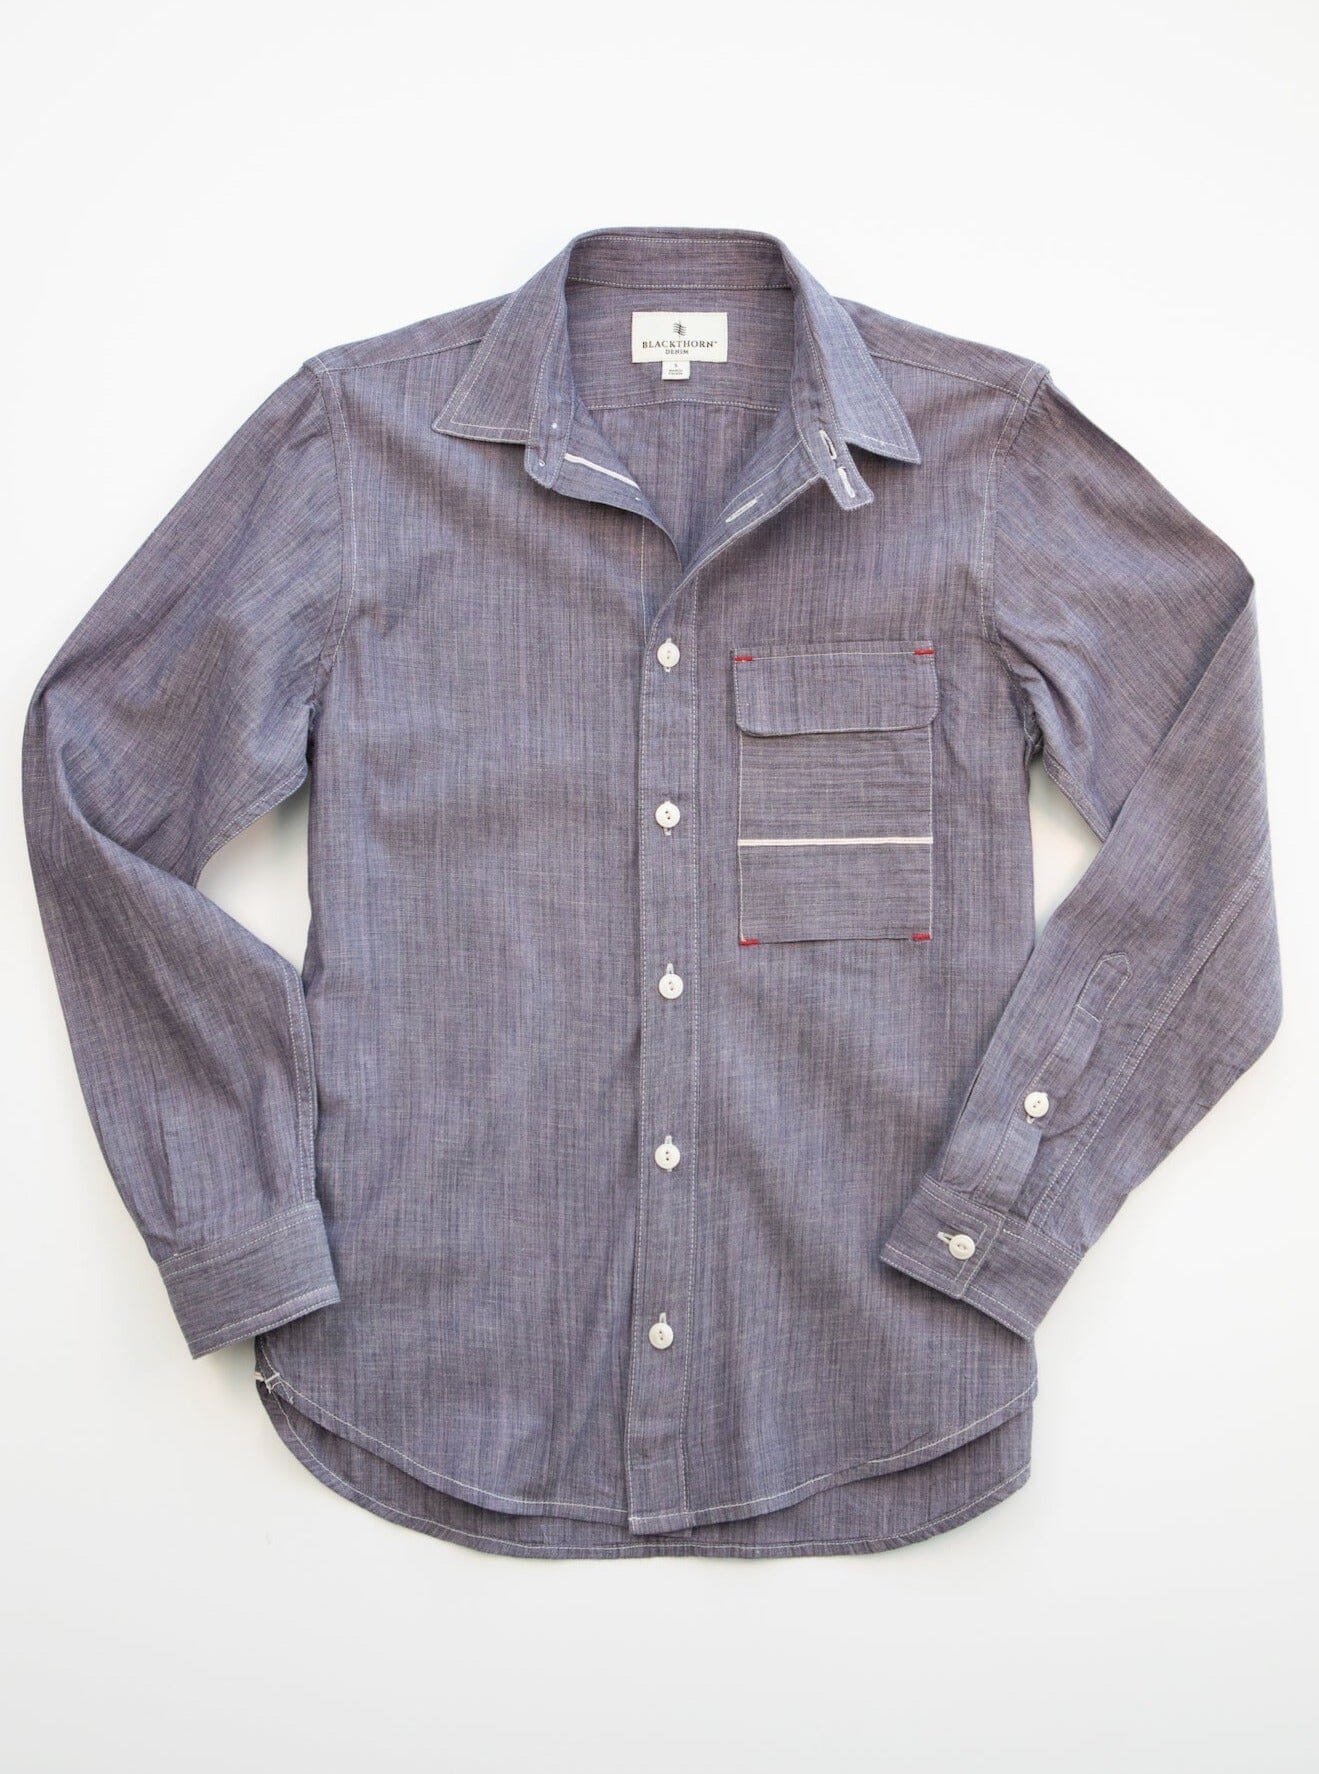 Blackthorn Denim - Hudson Work Shirt - High-Low Blue - City Workshop Men's Supply Co.